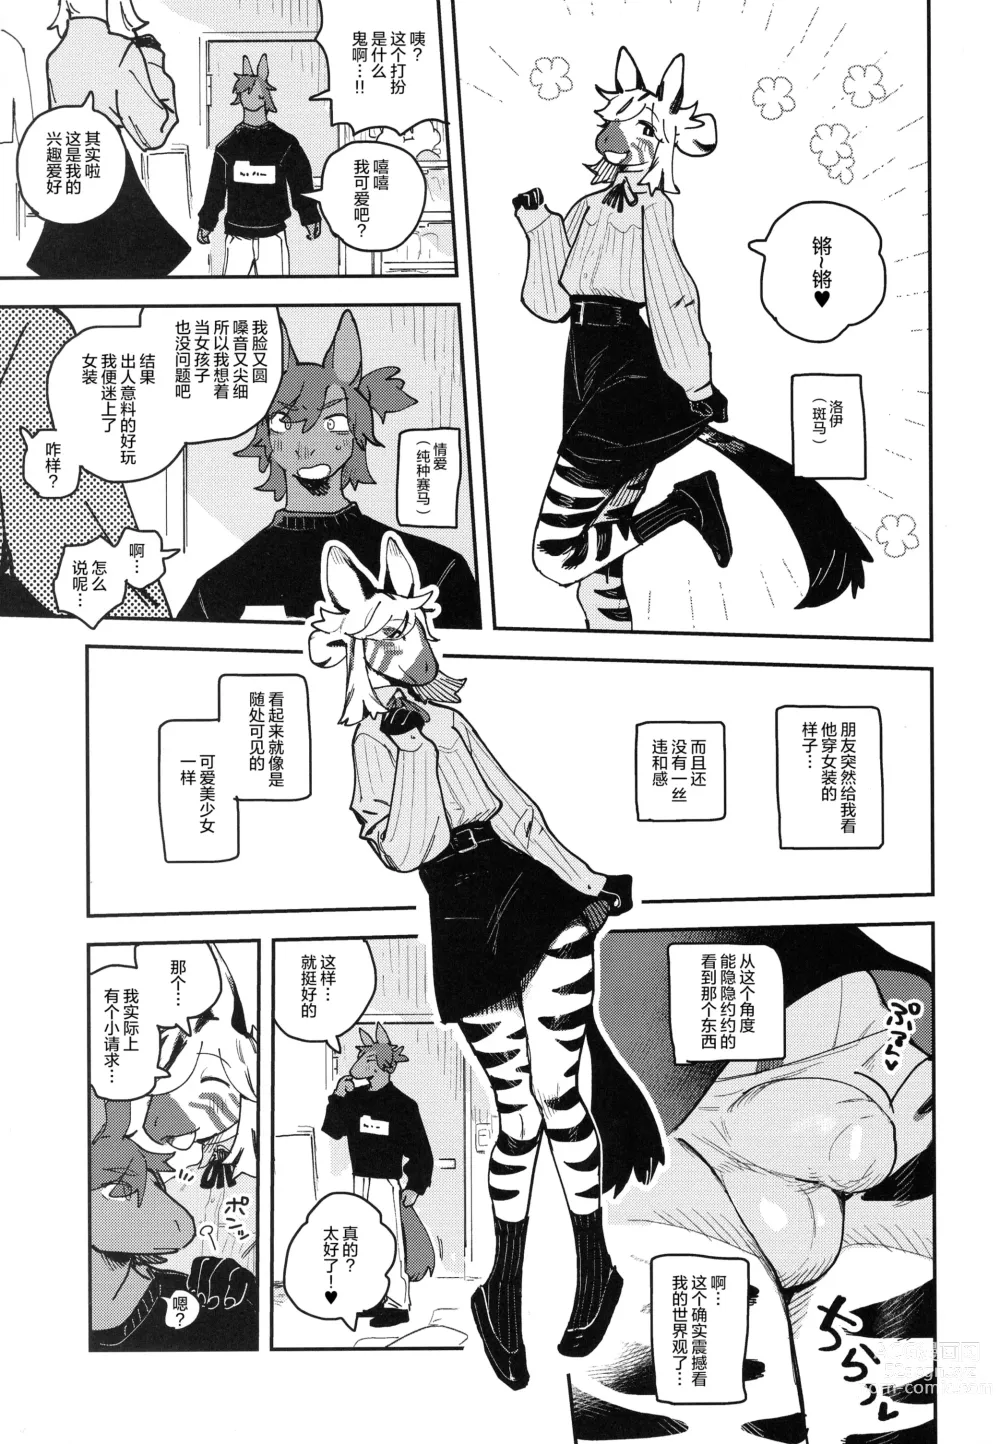 Page 7 of doujinshi 热辣甜心马屌女孩